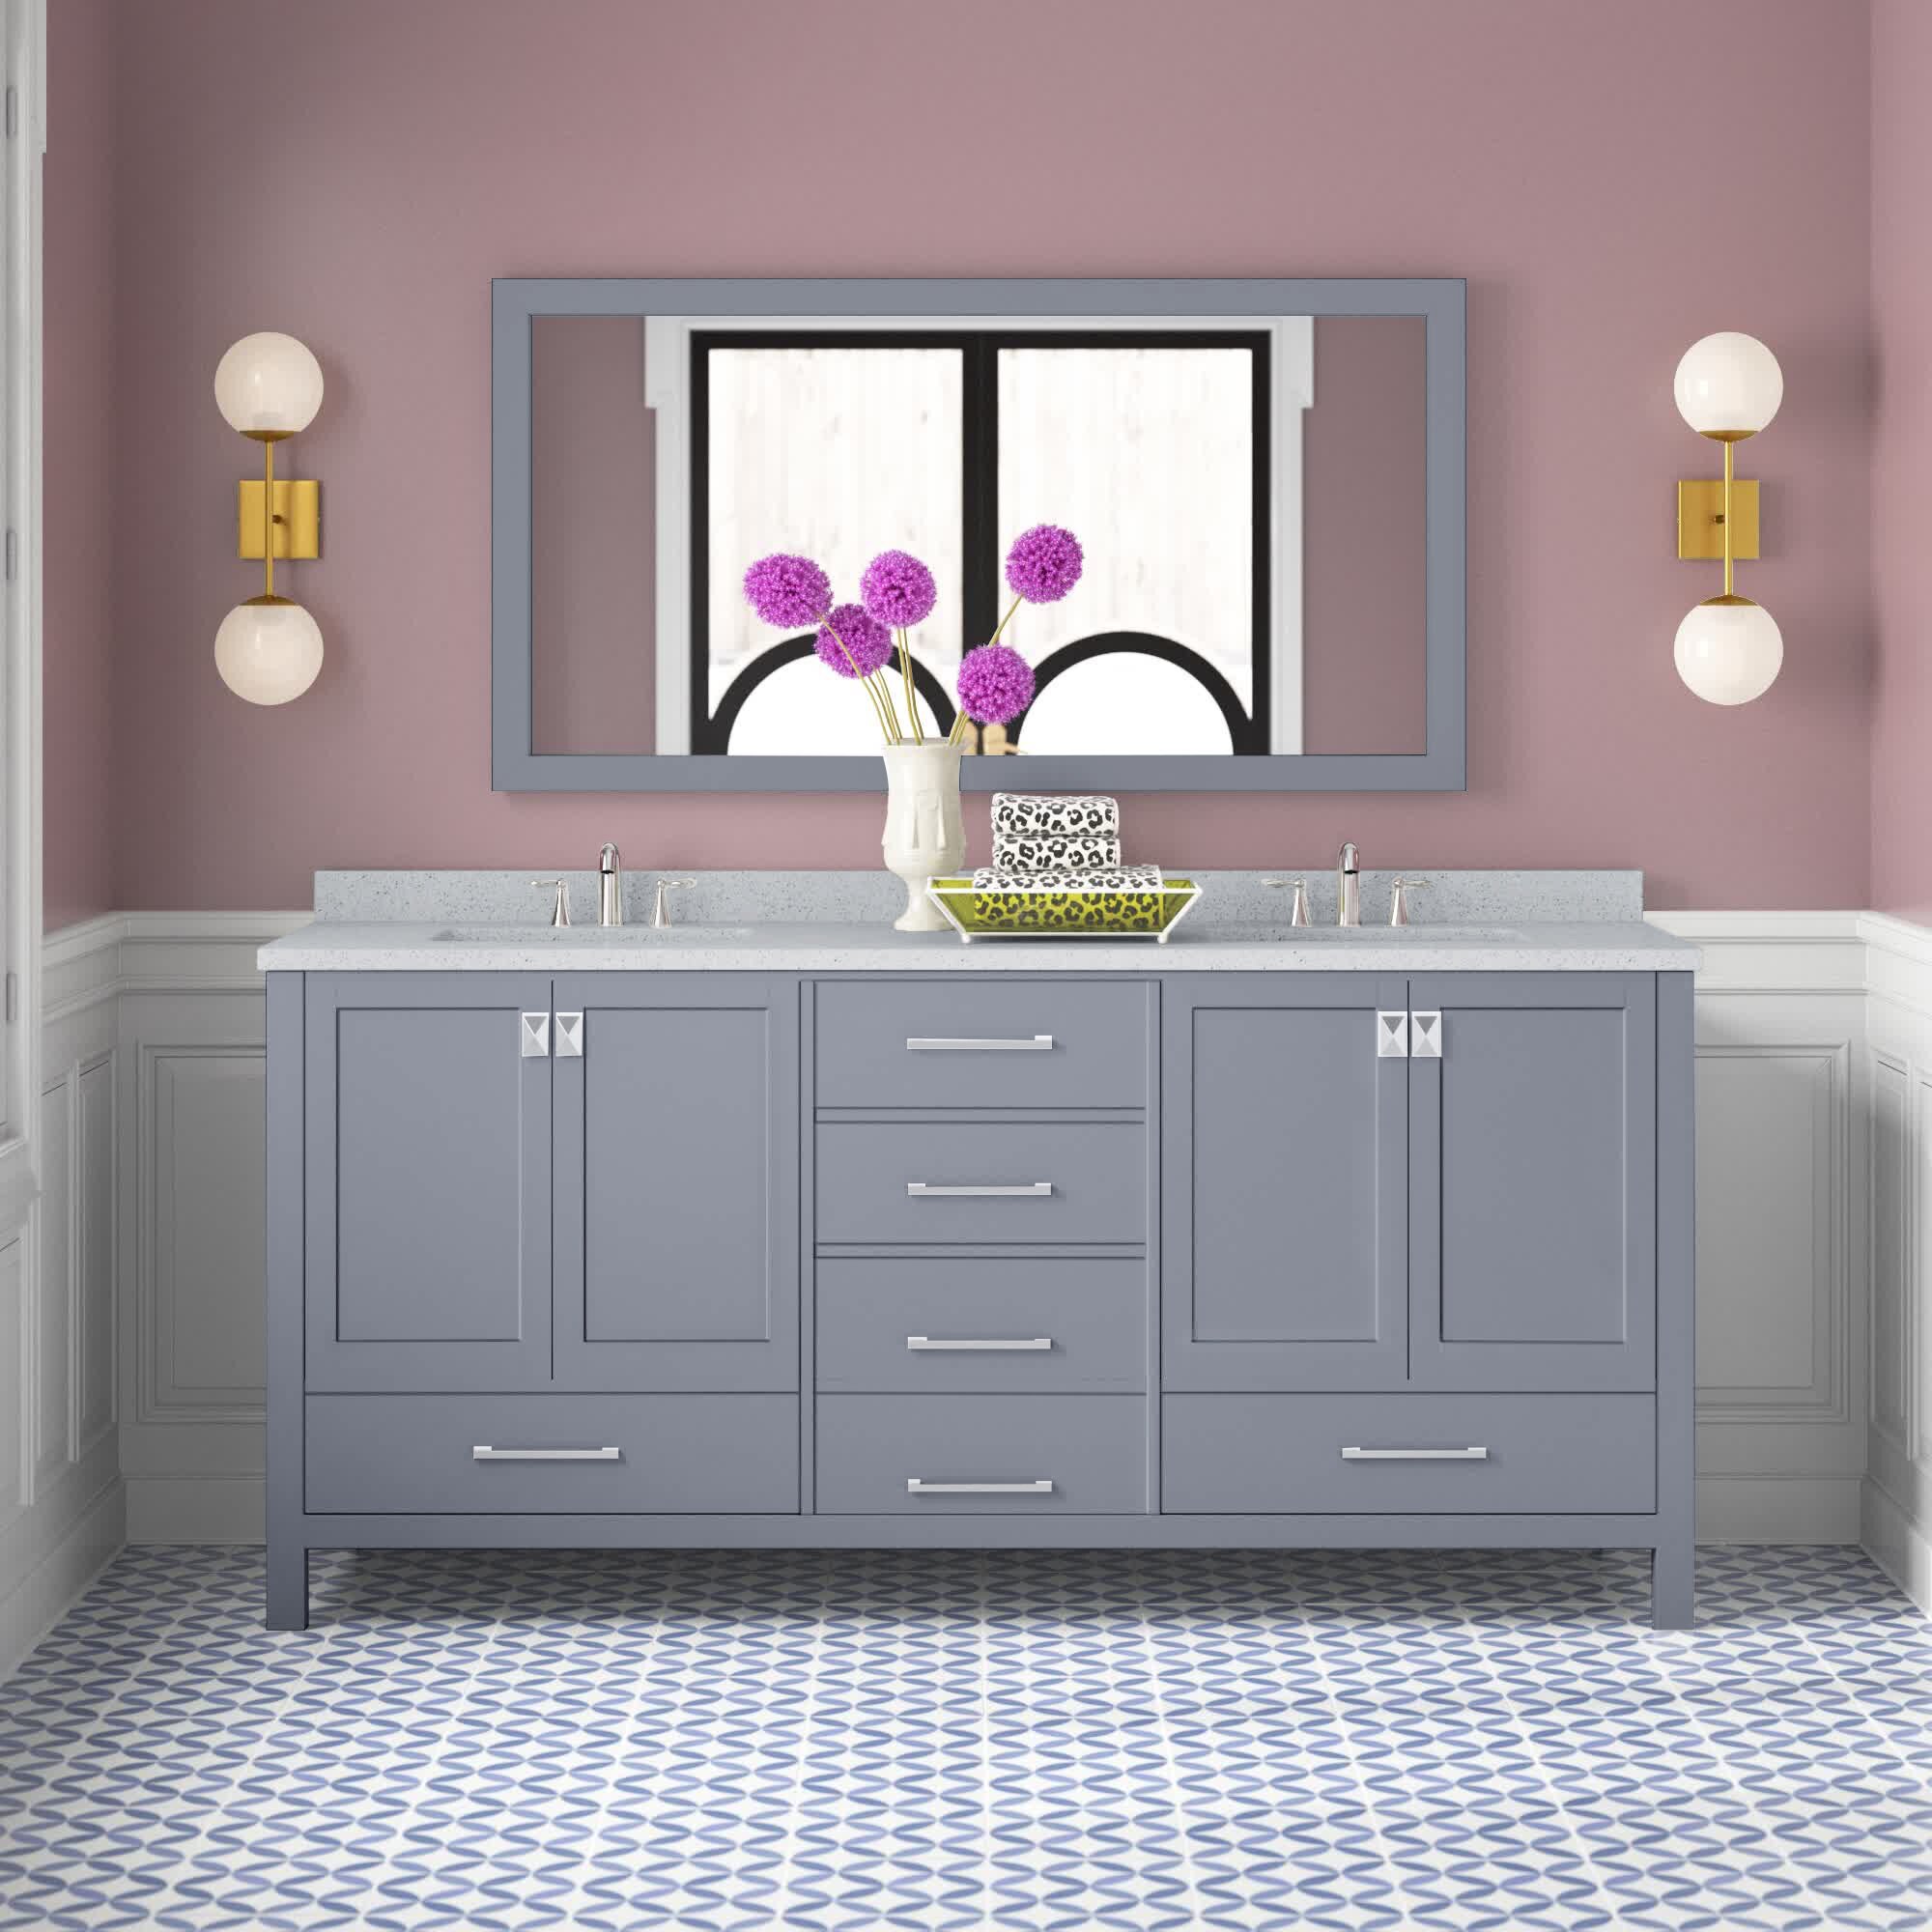 Dark Pink and Grey Bathroom Decor